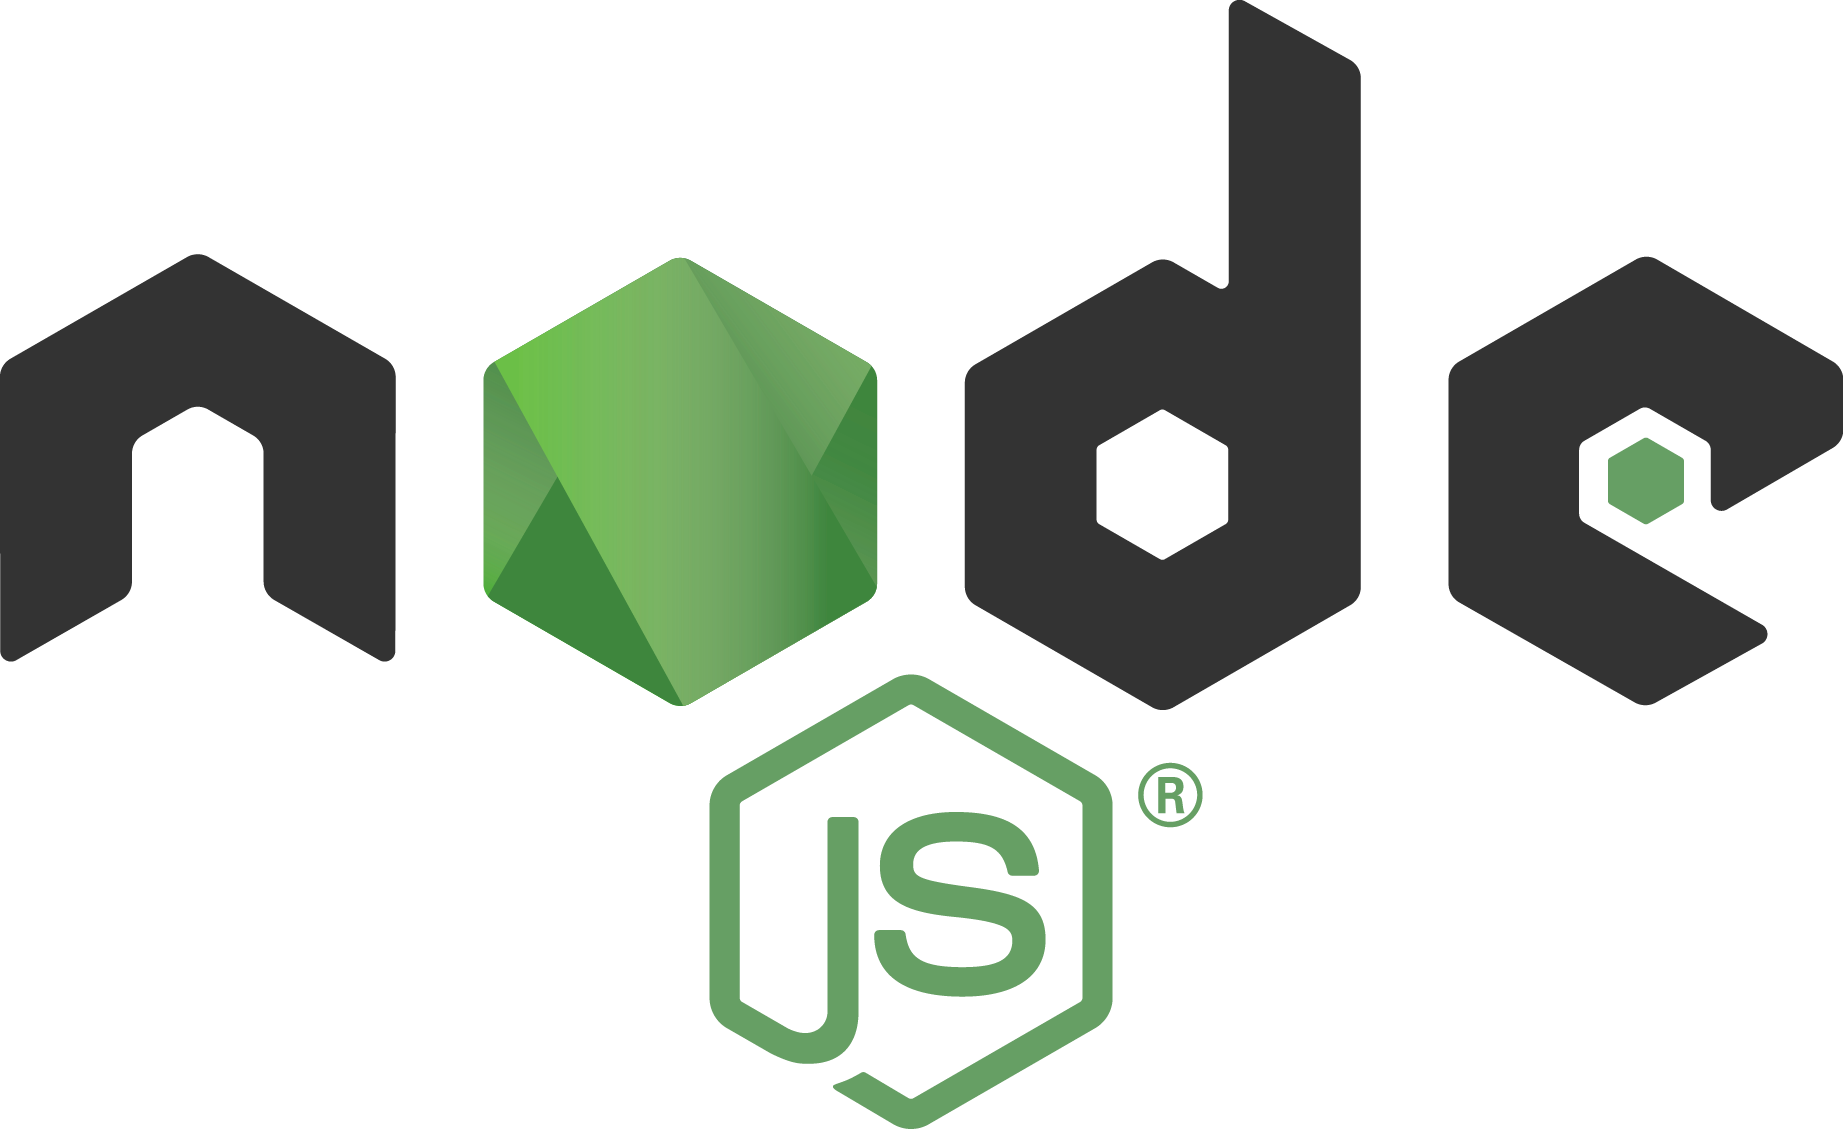 Node.js 12.1.0: First update for new major version